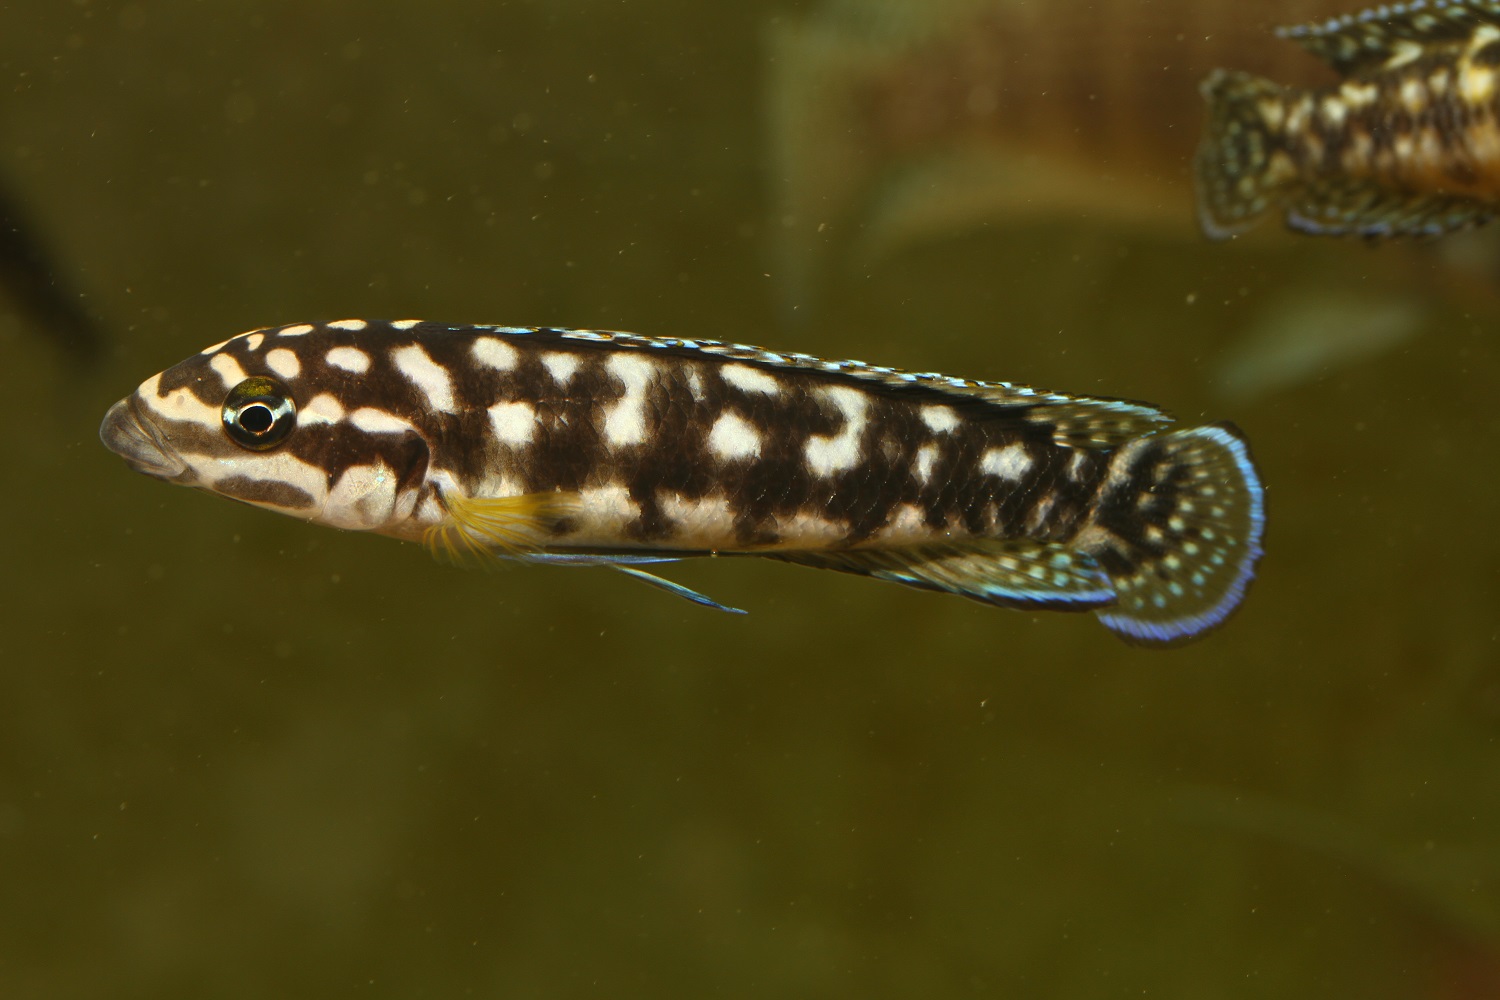 Julidochromis sp. Kombe